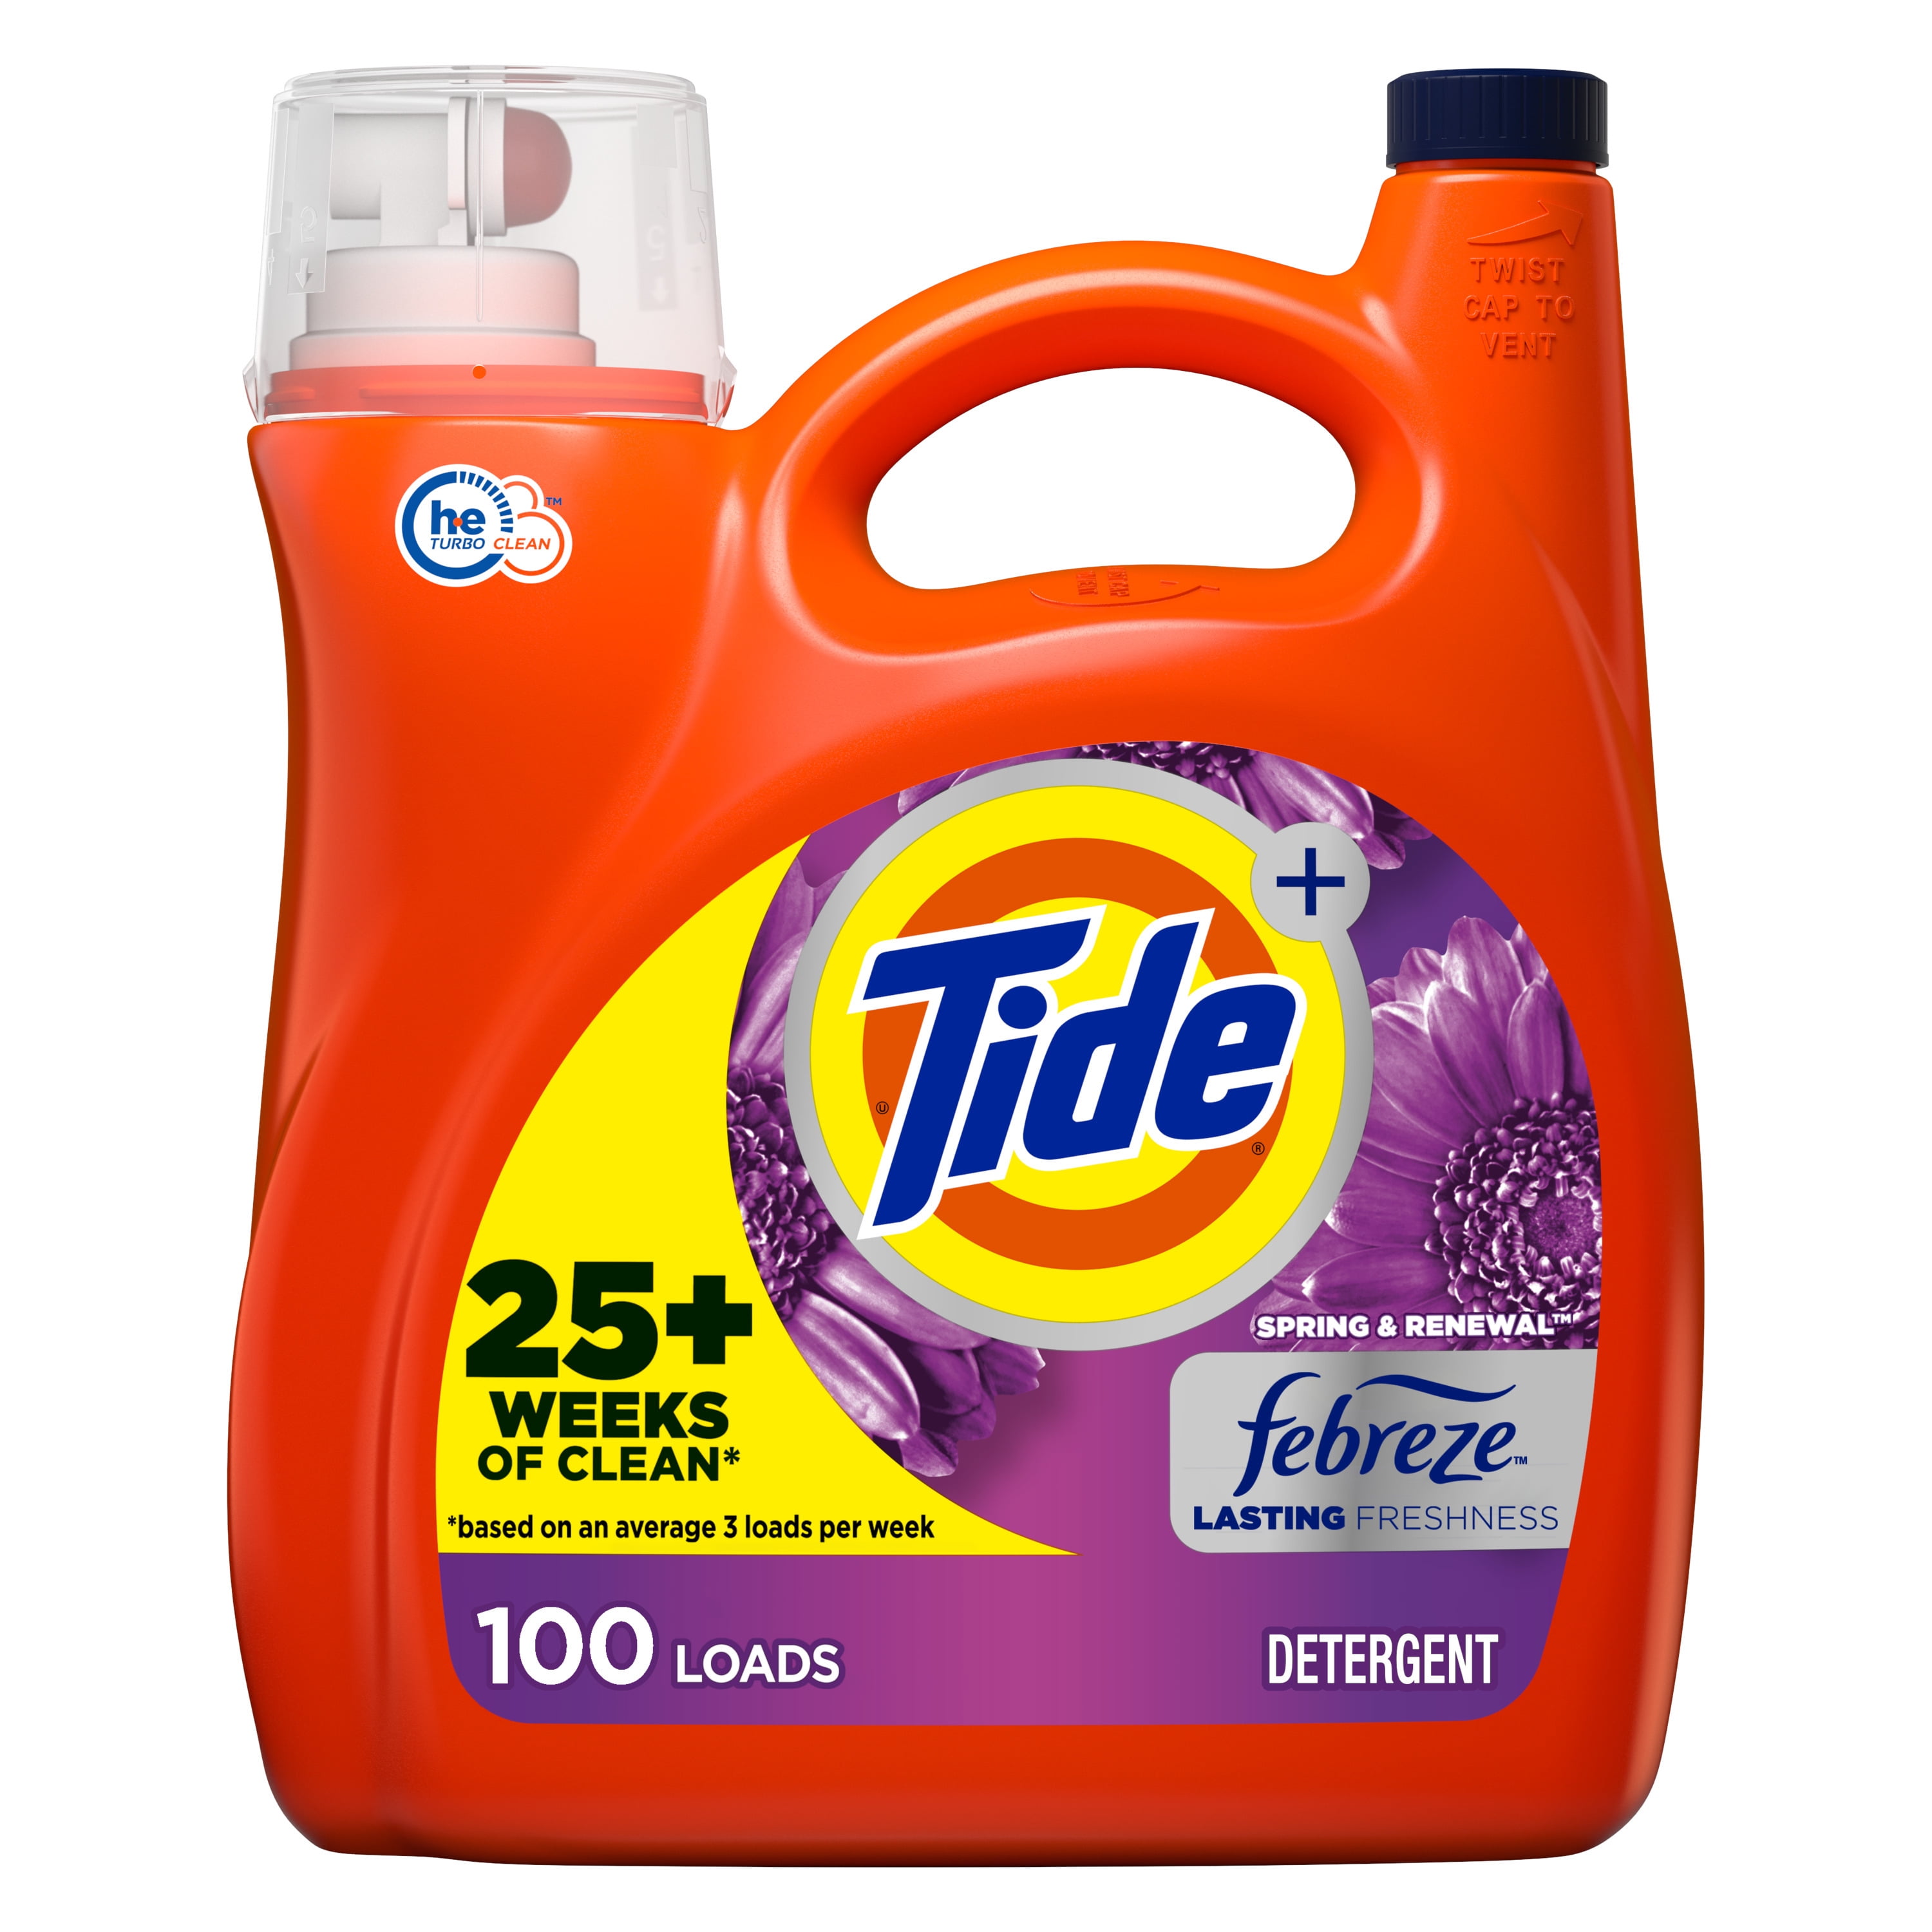 Tide Plus Febreze Spring & Renewal, Liquid Laundry Detergent, 154 fl oz, 100 Loads